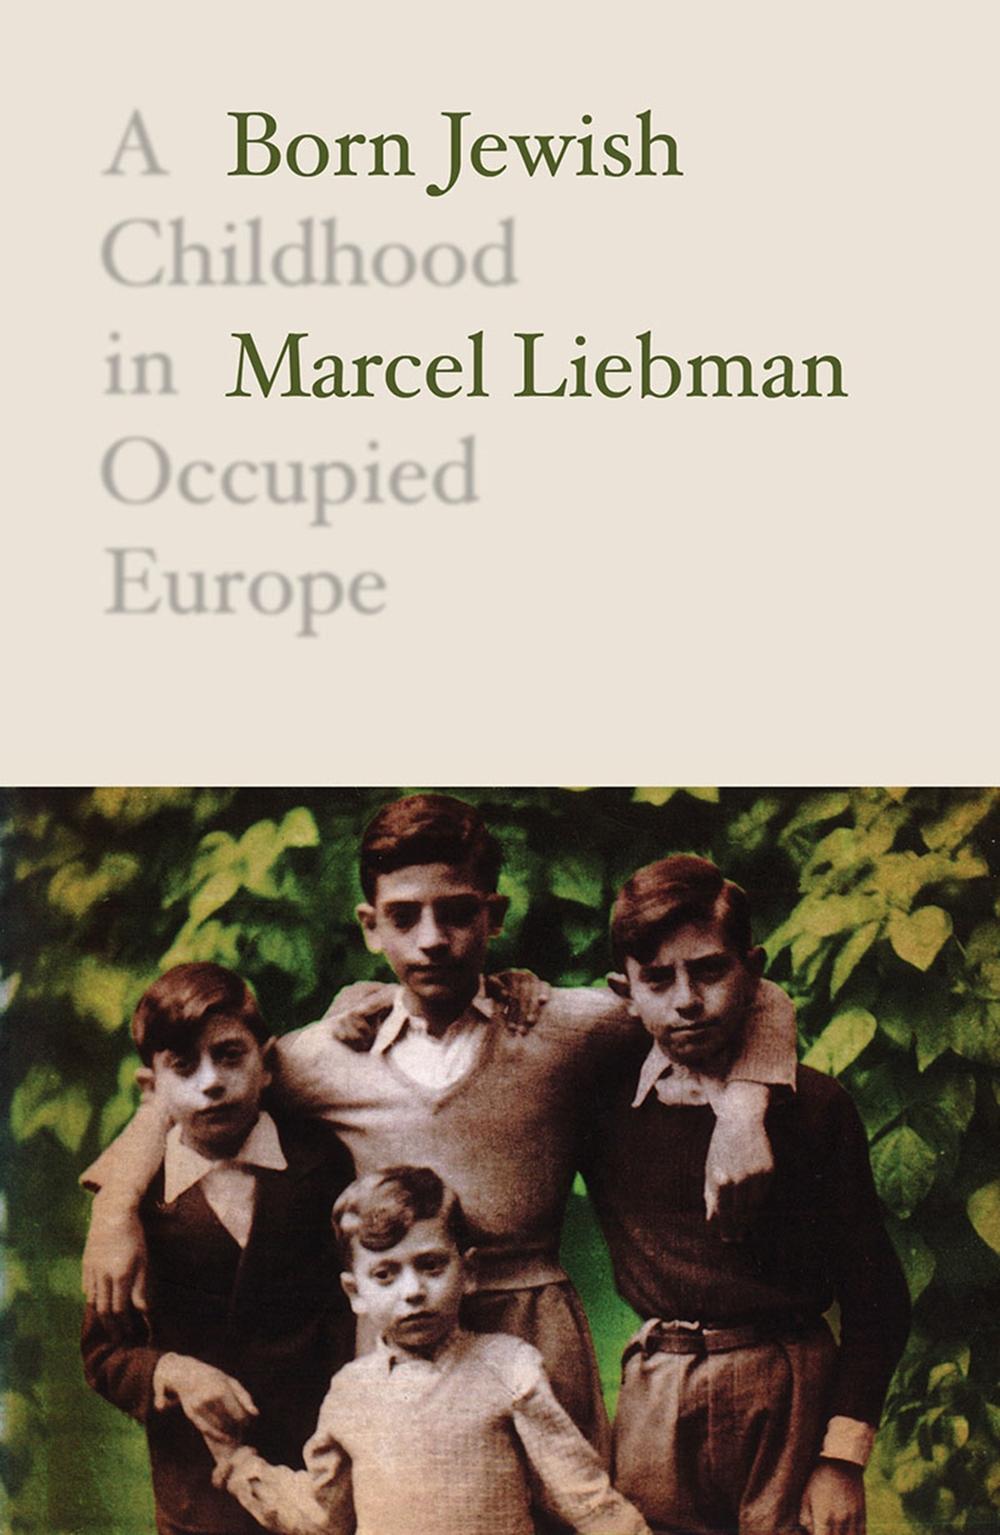 Born Jewish - Marcel Liebman